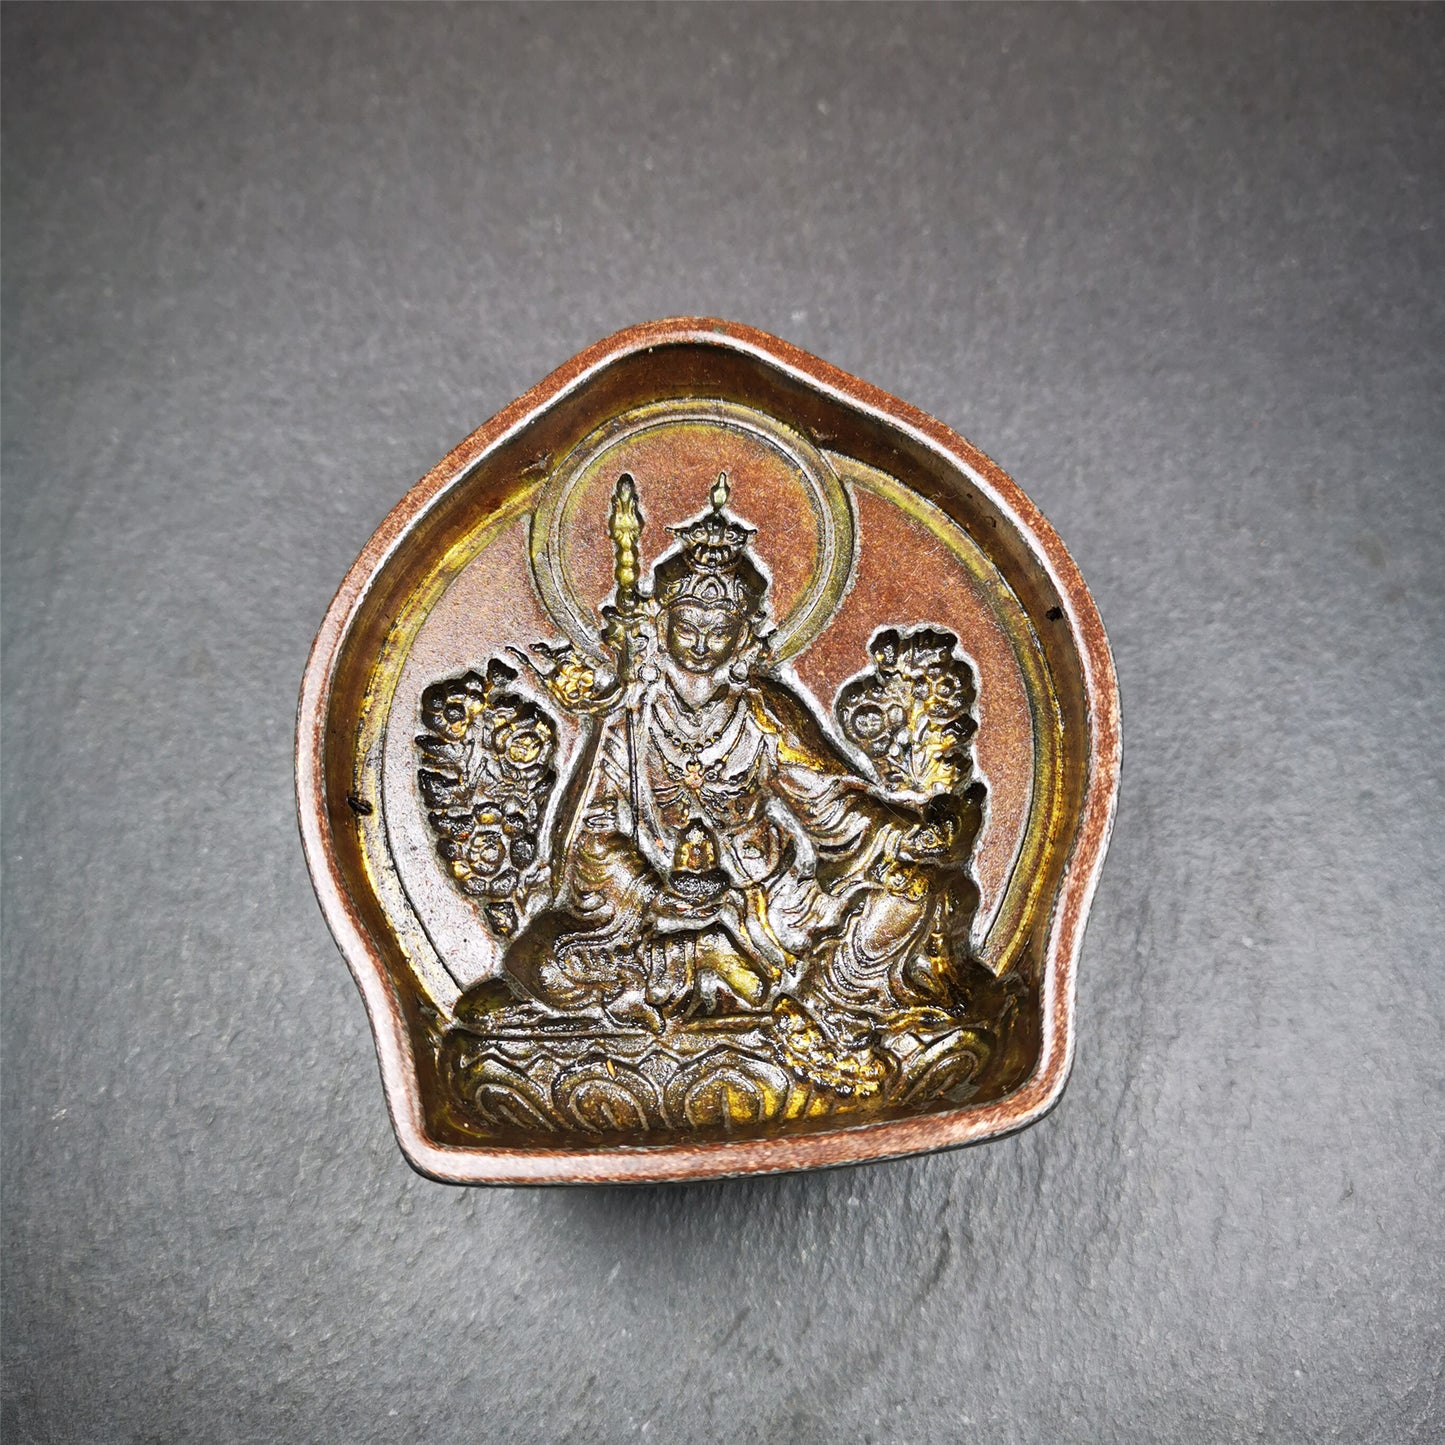 Gandhanra Handmade Tibetan Buddha Statue Mold,Guru Rinpoche,Padmasambhava,Copper Mould For Making Clay Buddha Statue,Tsa Tsa,Tsha Tsha